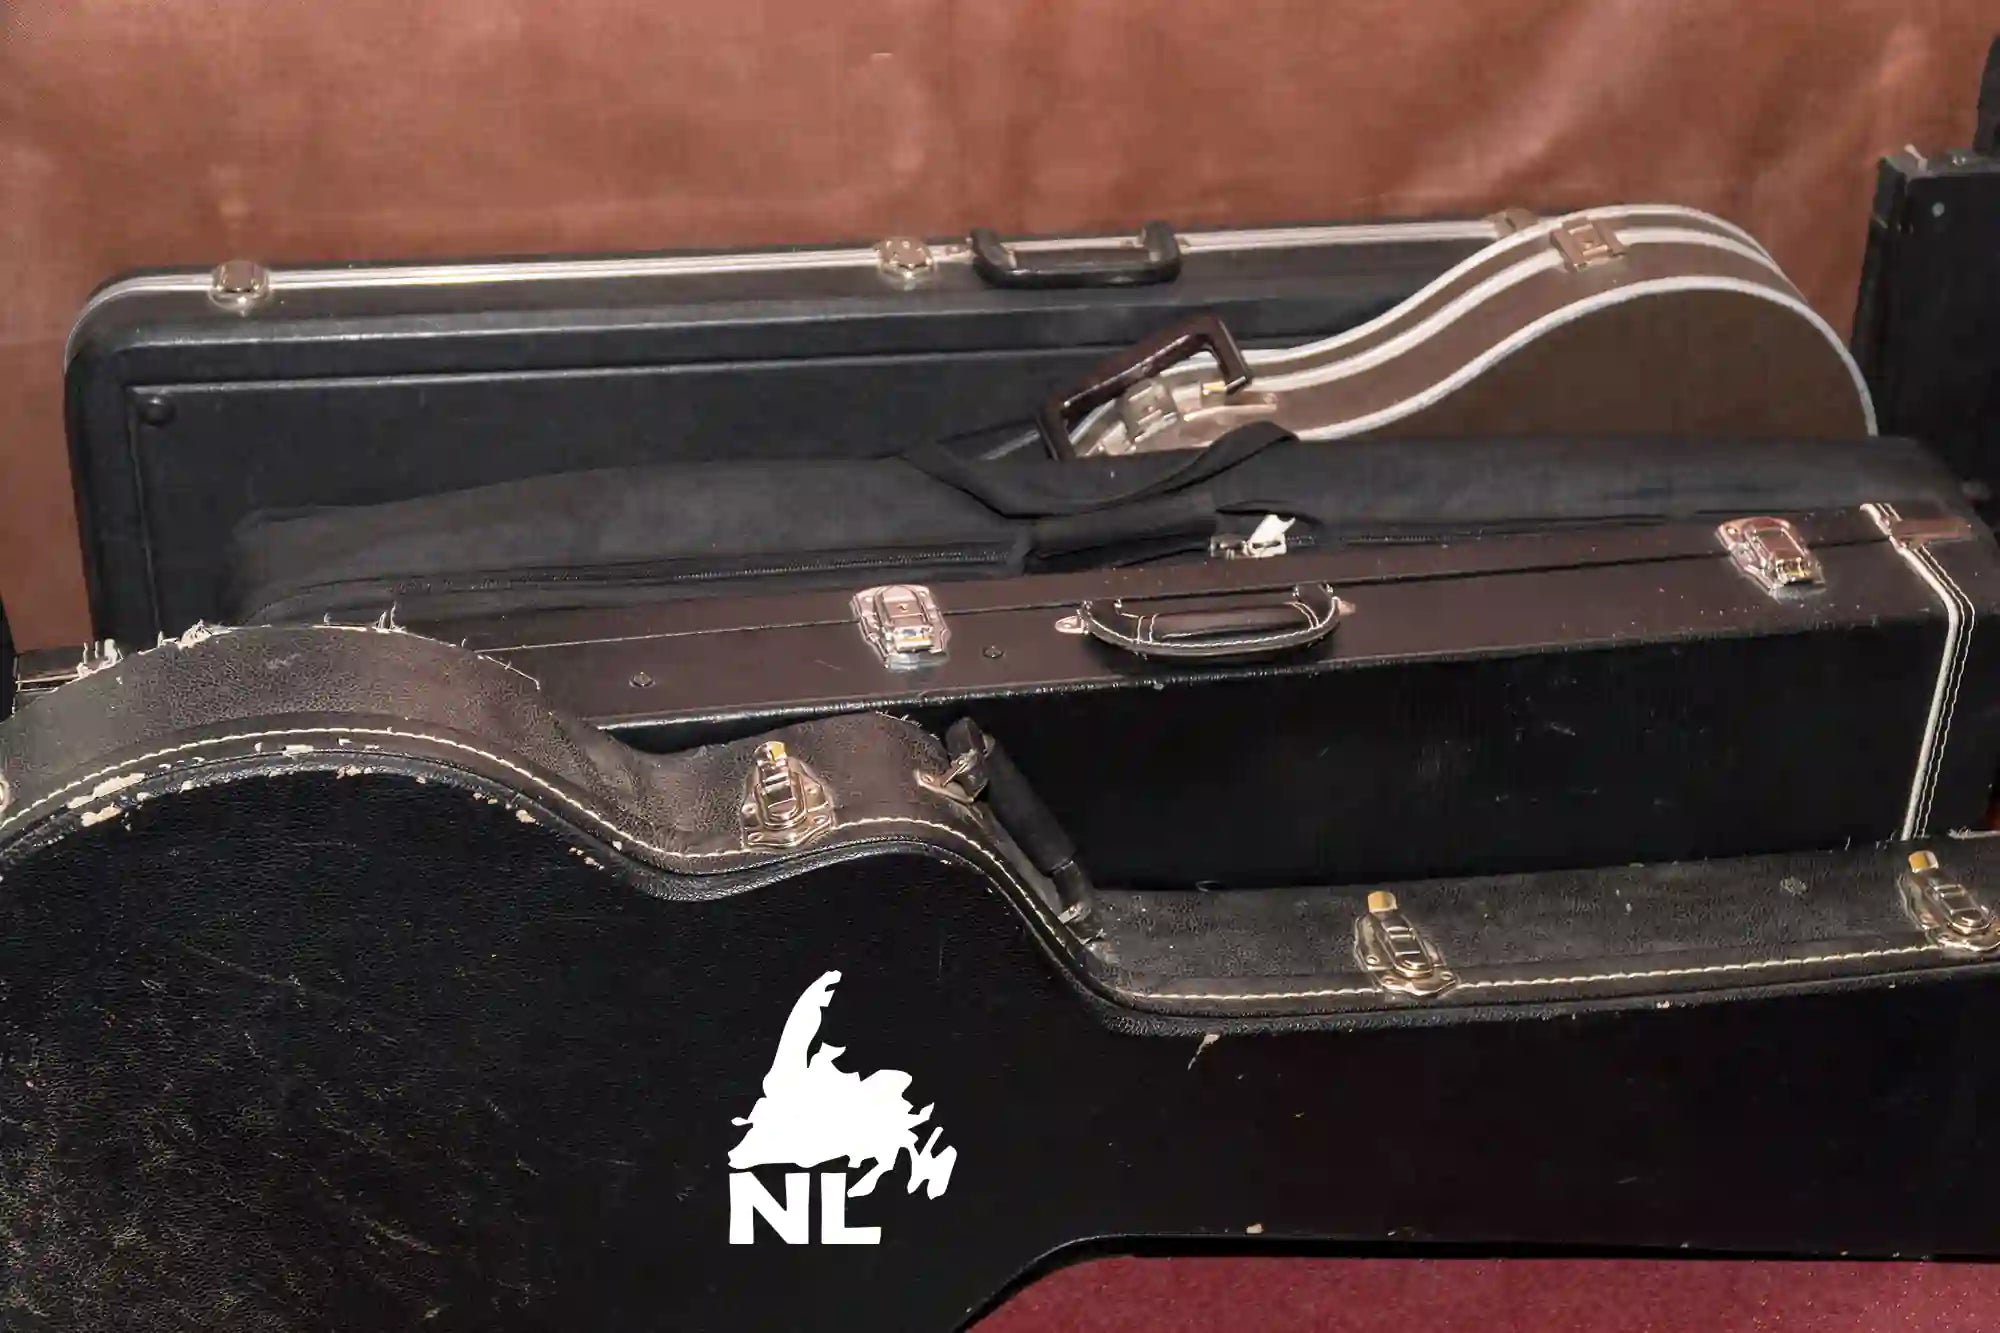 Newfoundland NL - Vinyl Car Decal Bumper Sticker - on a guitar case.